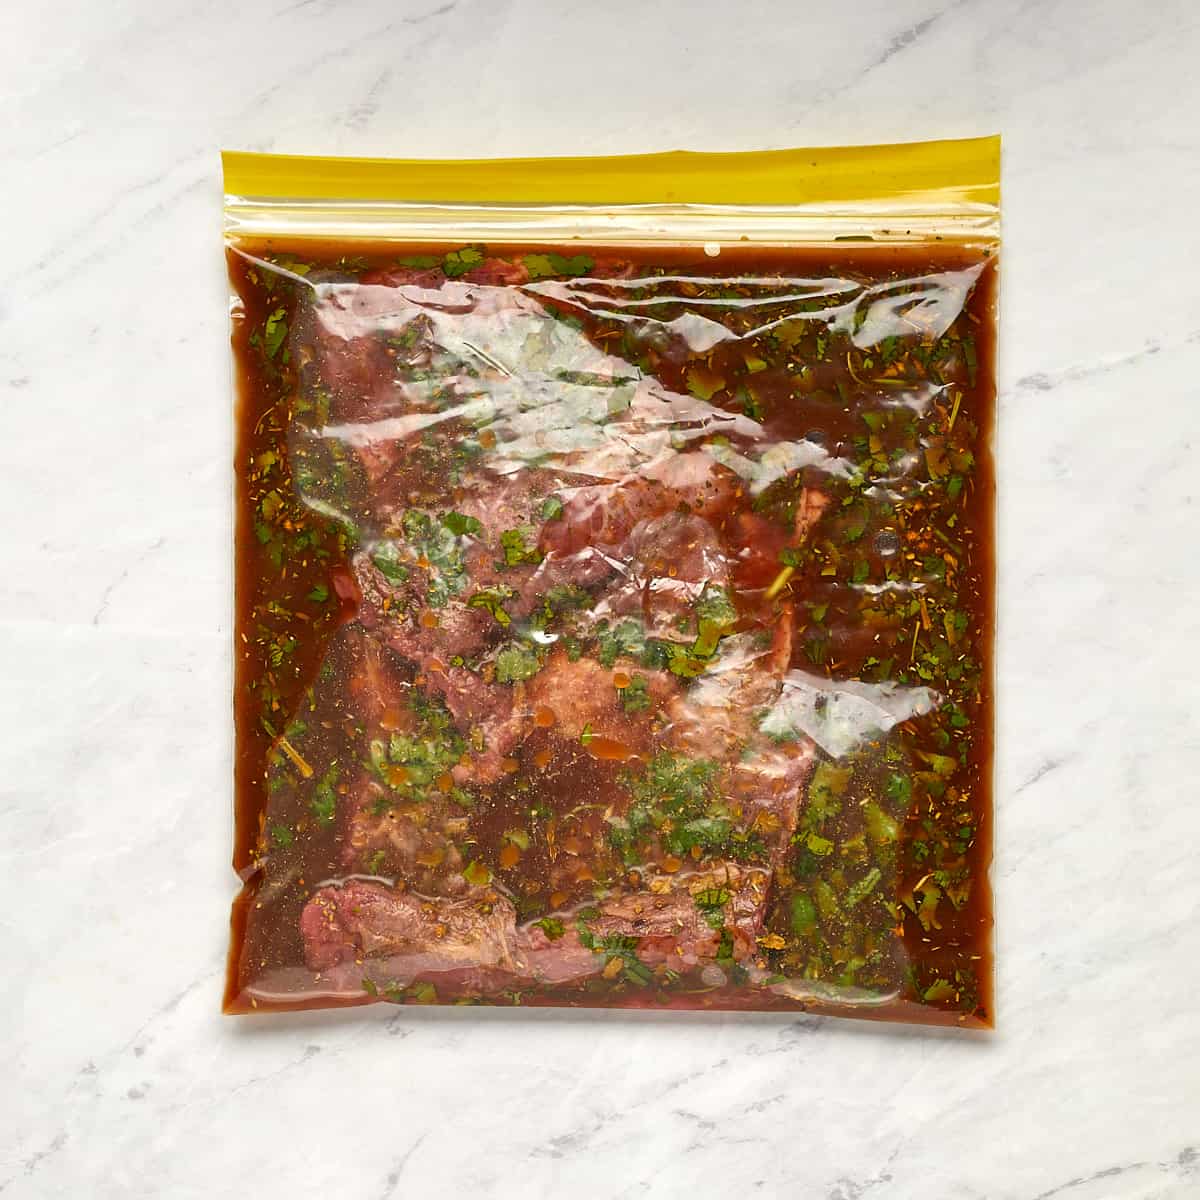 skirt steak in a ziplock bag with marinade